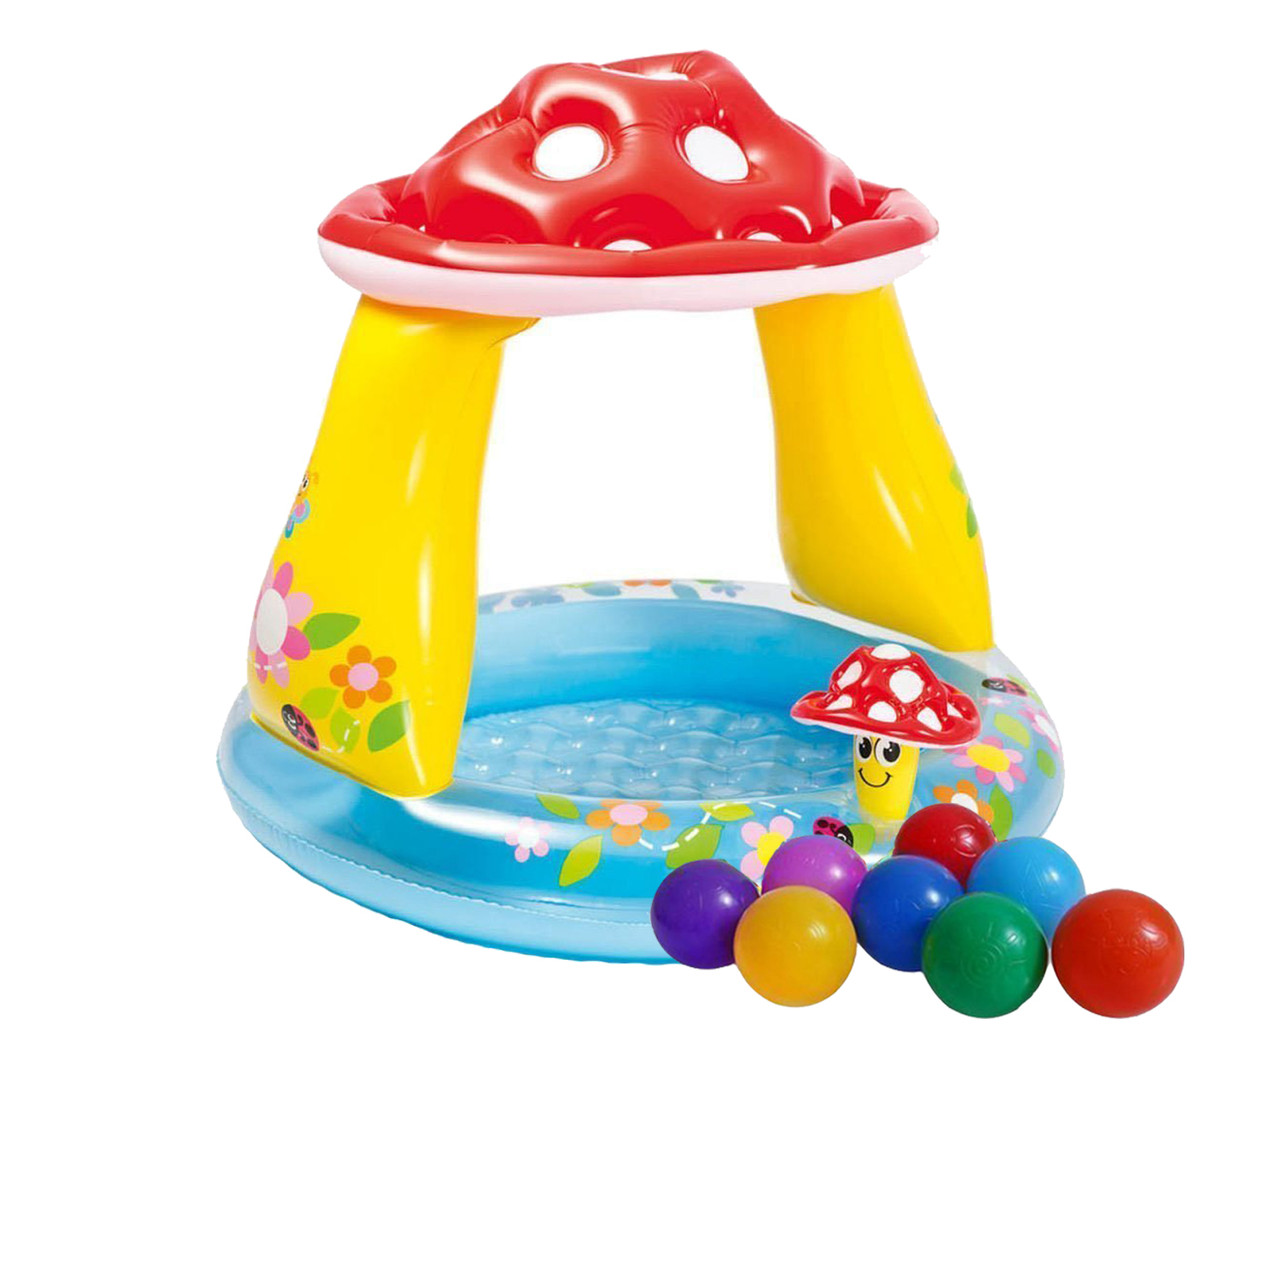 Дитячий надувний басейн Intex 57114-1 «Грибочок», 102 х 89 см, з кульками 10 шт.